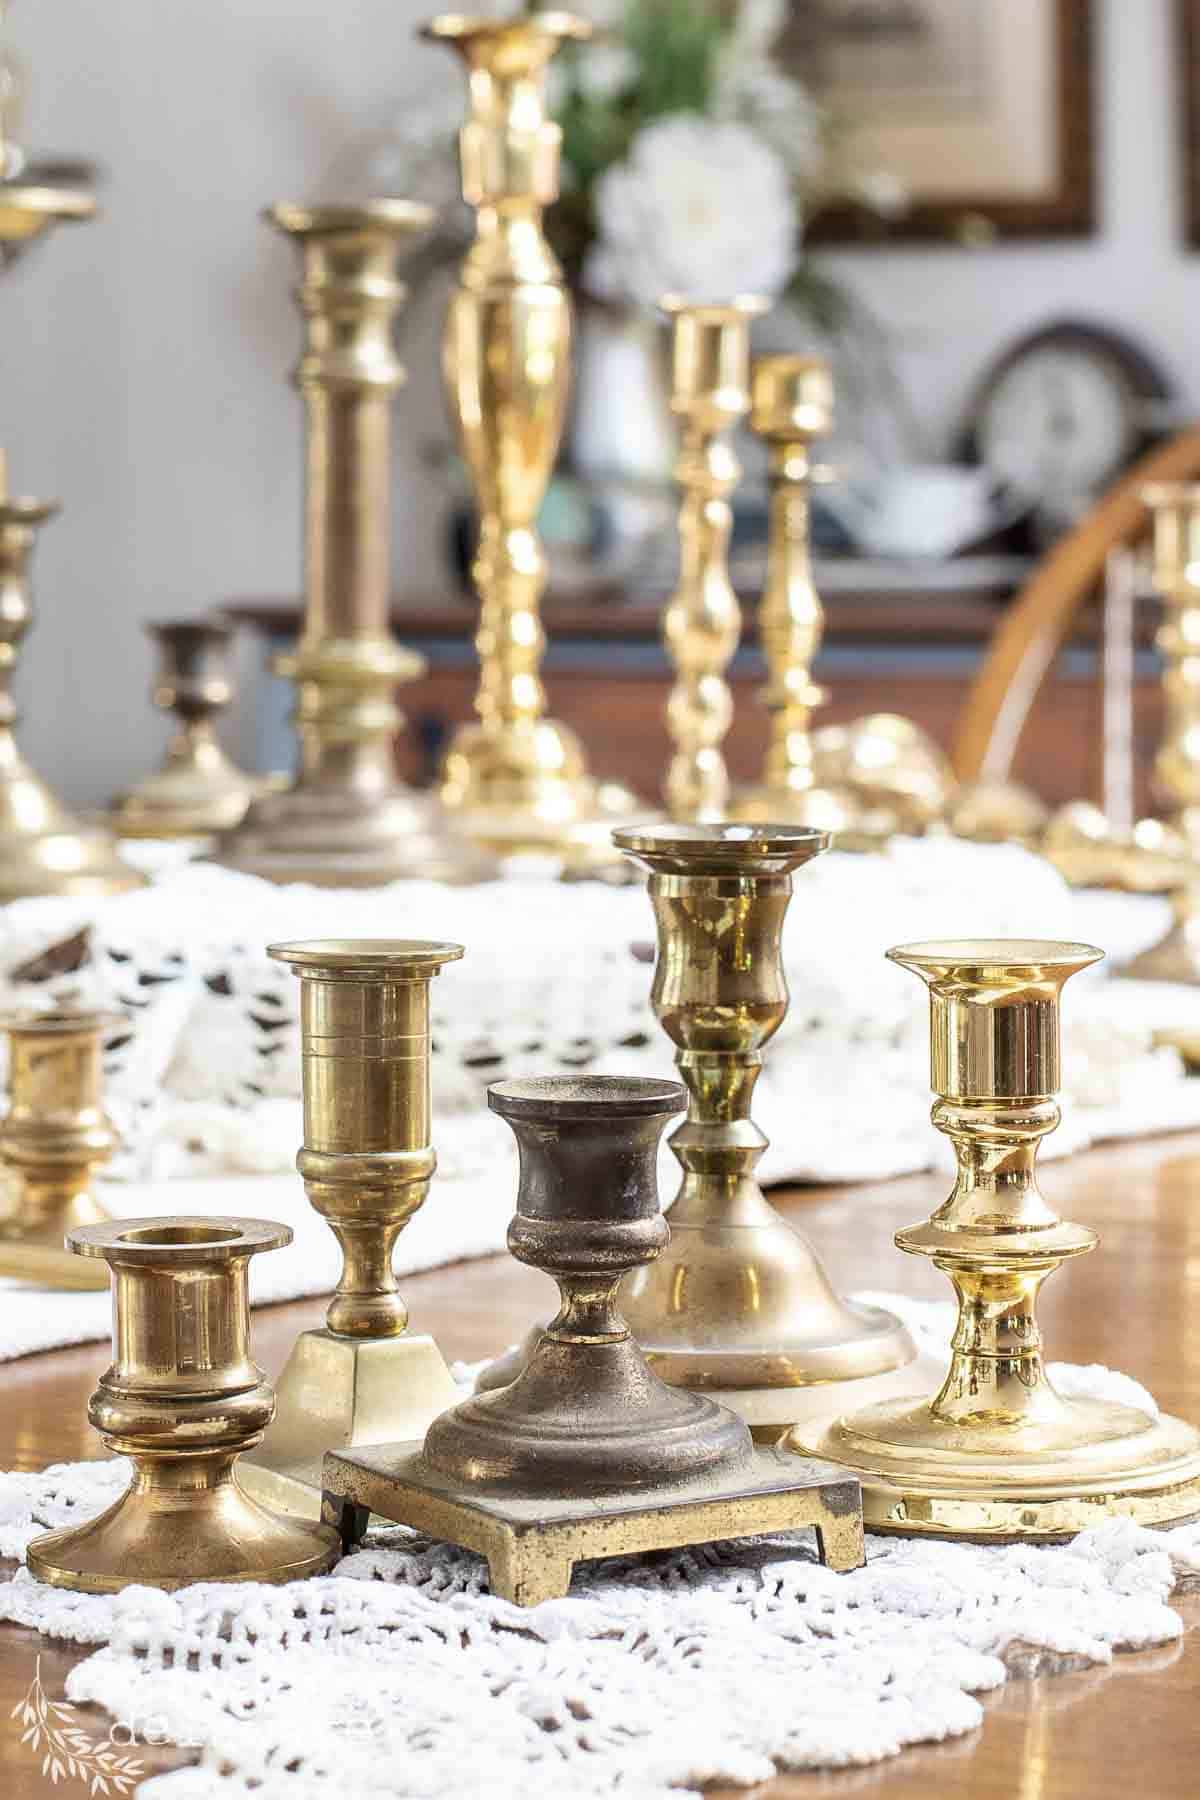 several real brass candlesticks